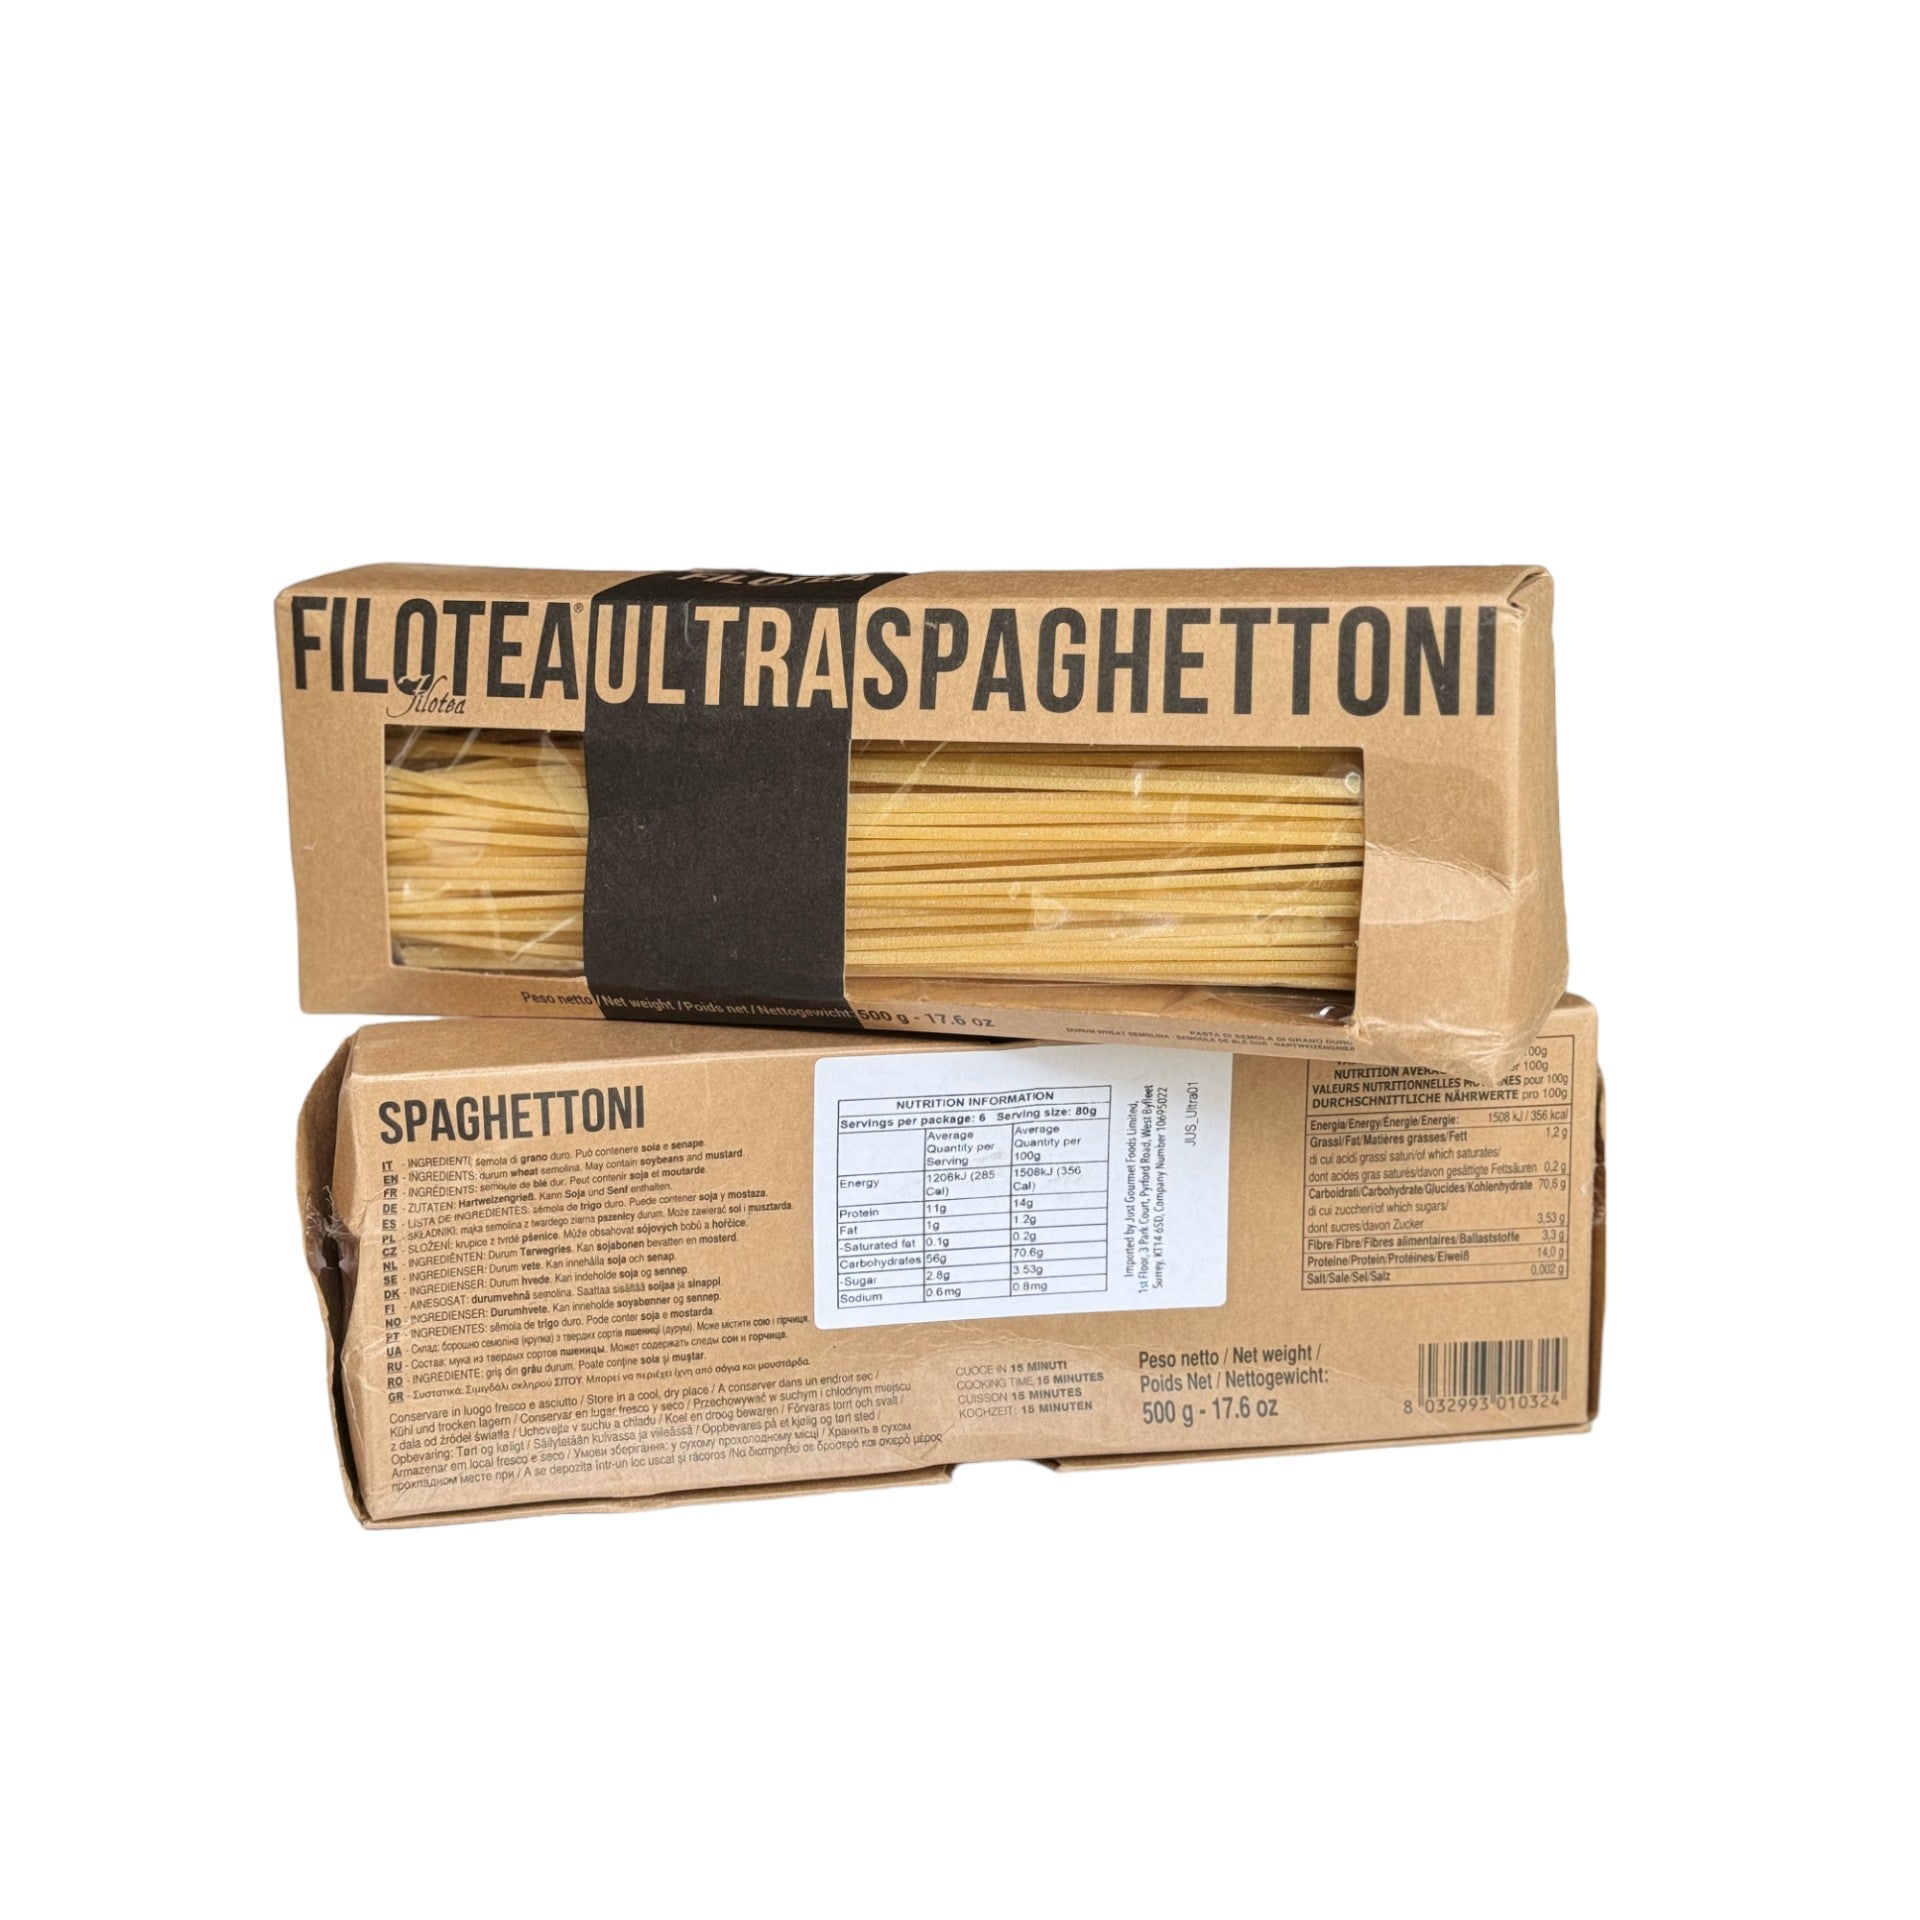 Filotea Ultra Spaghettoni Durum Wheat Semolina Pasta 500g - Damaged Box Feast Italy